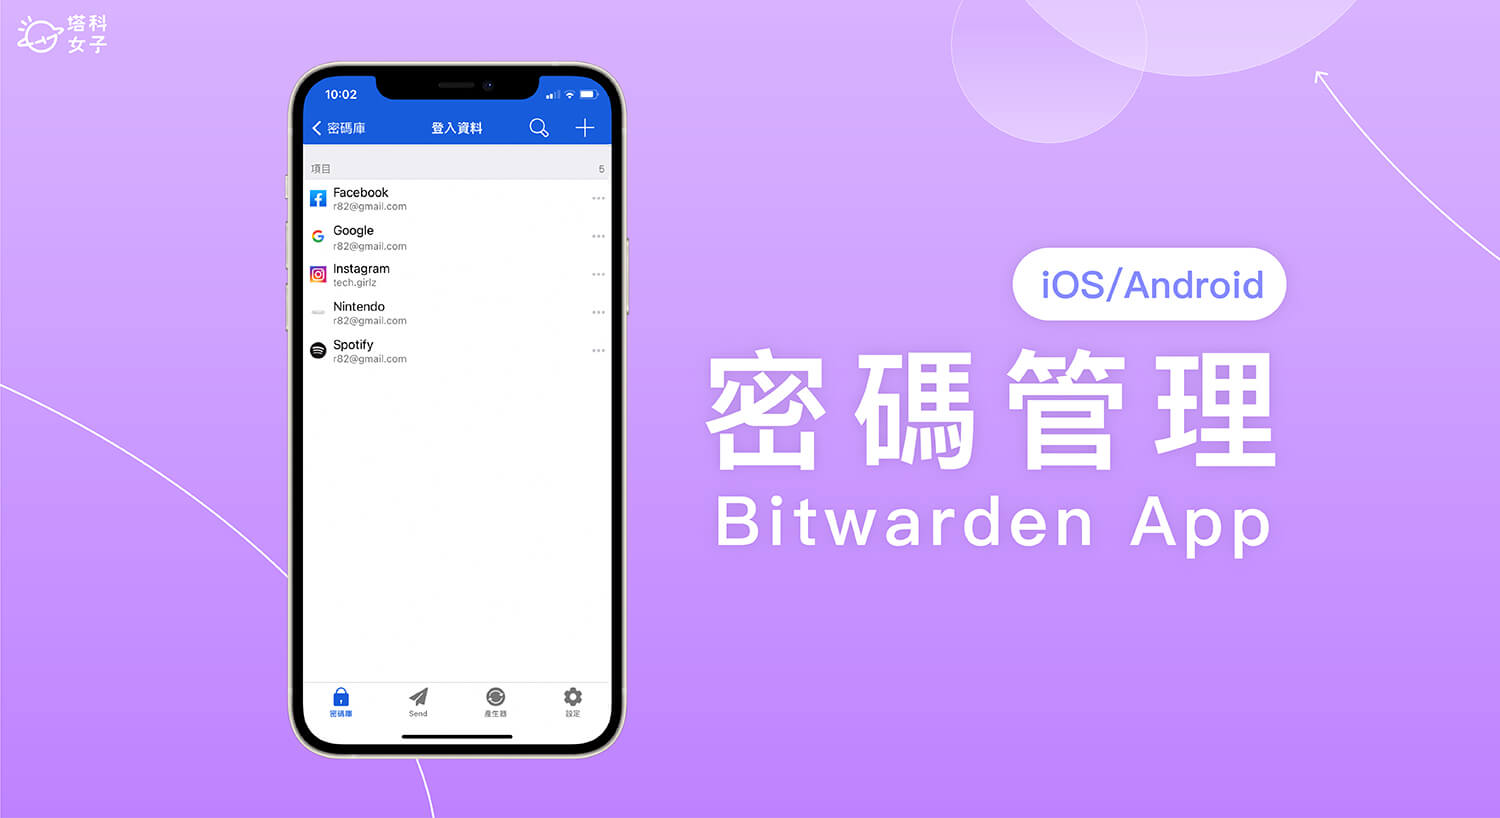 Bitwarden 密碼管理 APP 儲存密碼庫並自動填入密碼 (iOS、Android)